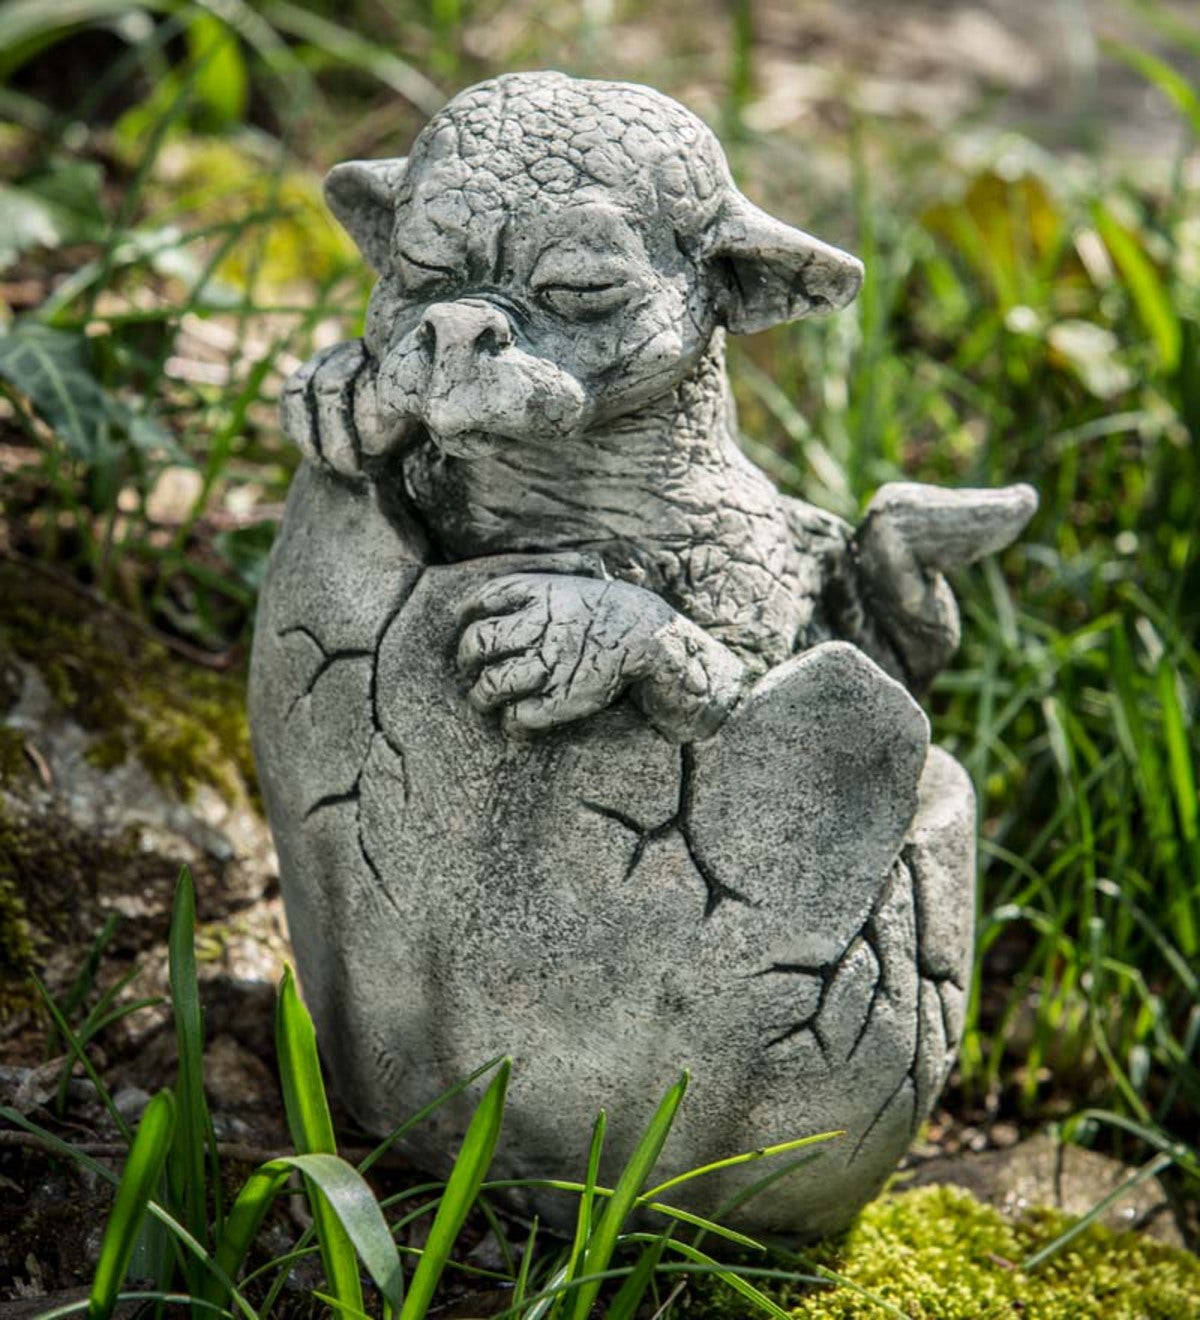 Little Darling Dragon 'Eating Apple' cast stone-cute baby animal garden statue 